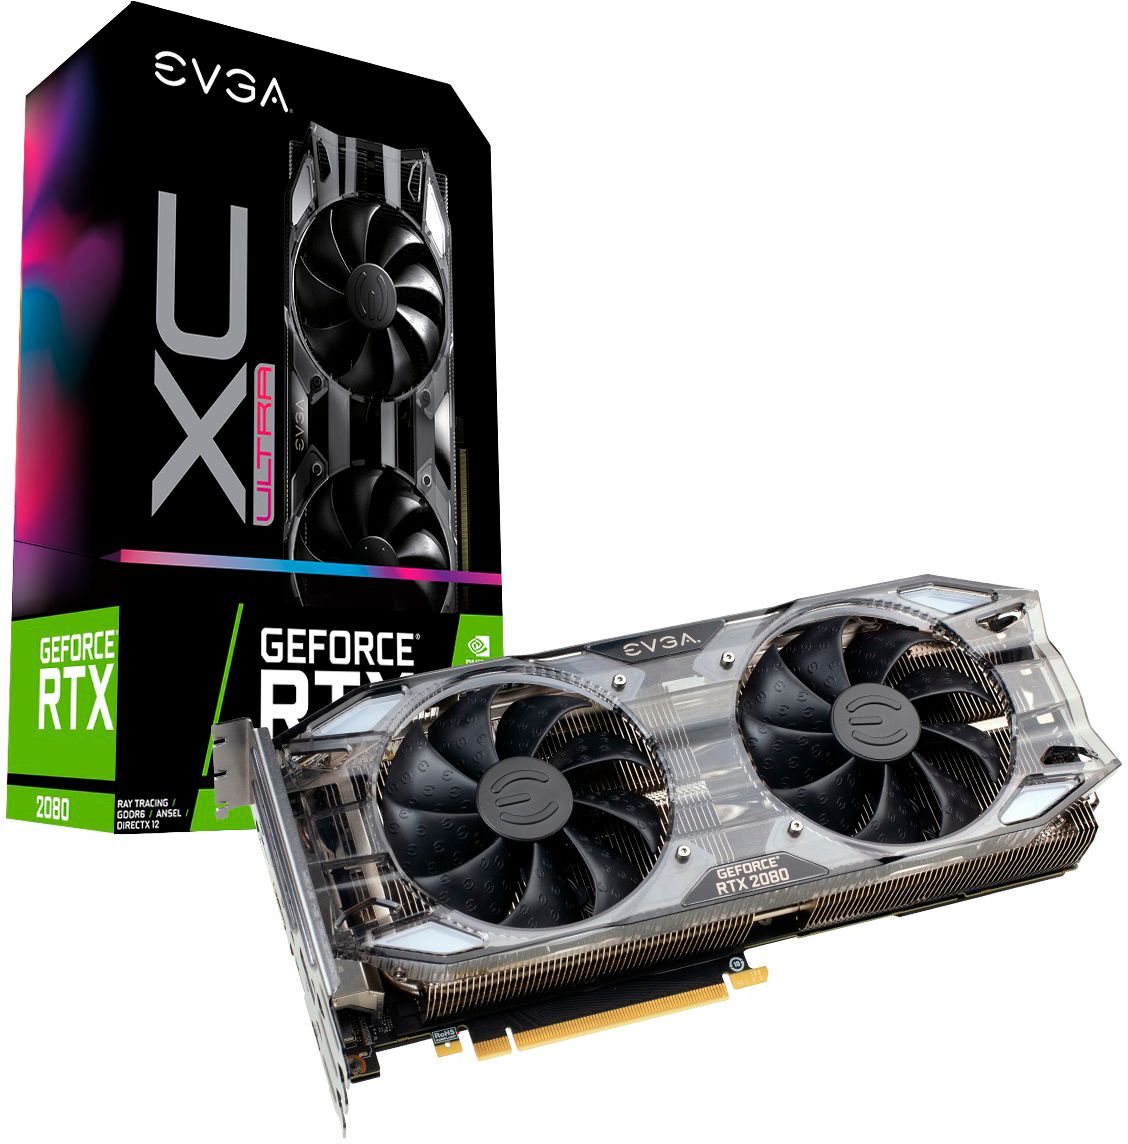 Best Buy: EVGA GeForce RTX 2080 XC Ultra Gaming 8GB GDDR6 PCI